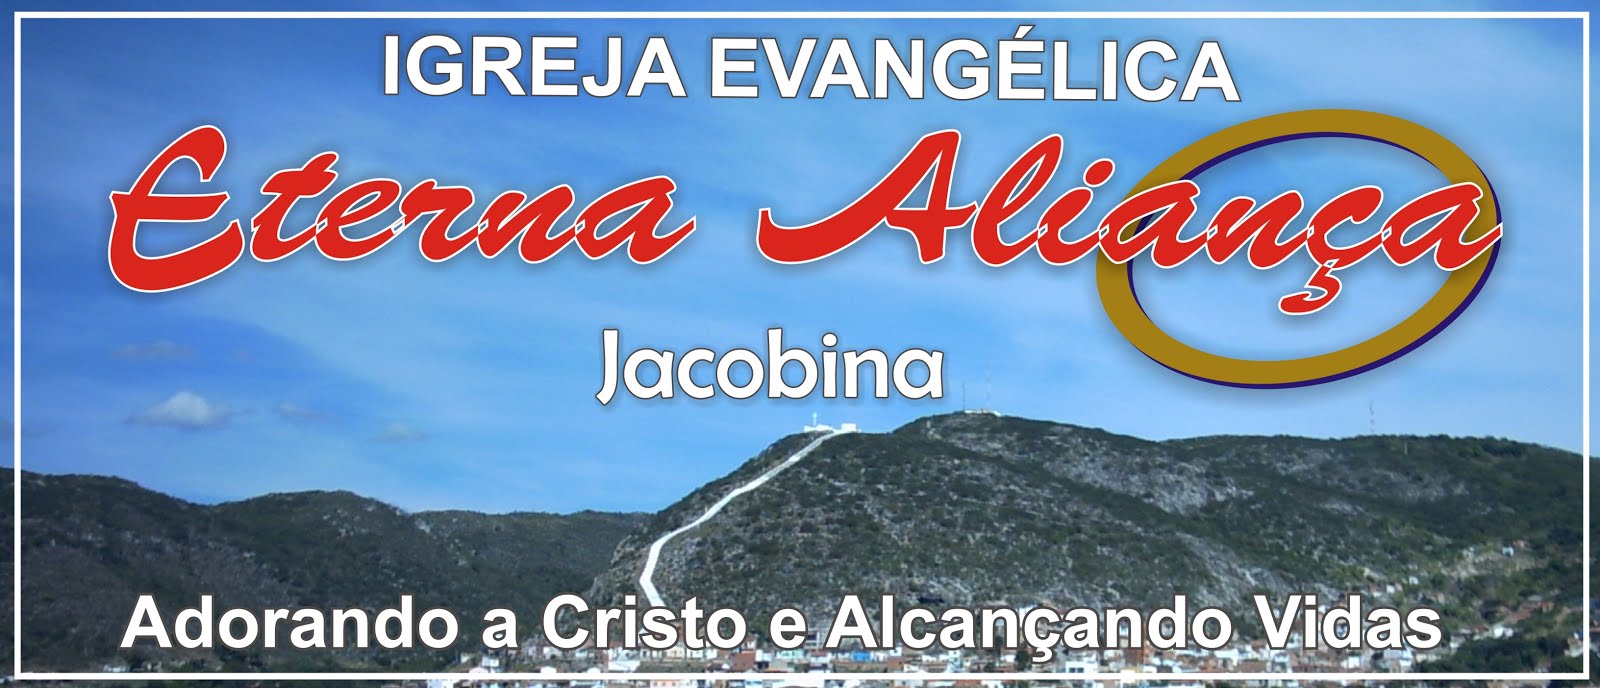 Igreja Evangélica Eterna Aliança - Jacobina (BA)